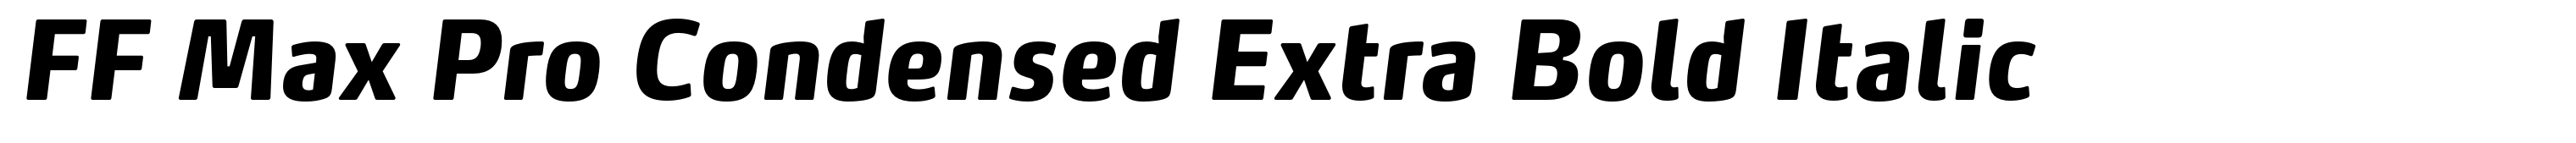 FF Max Pro Condensed Extra Bold Italic